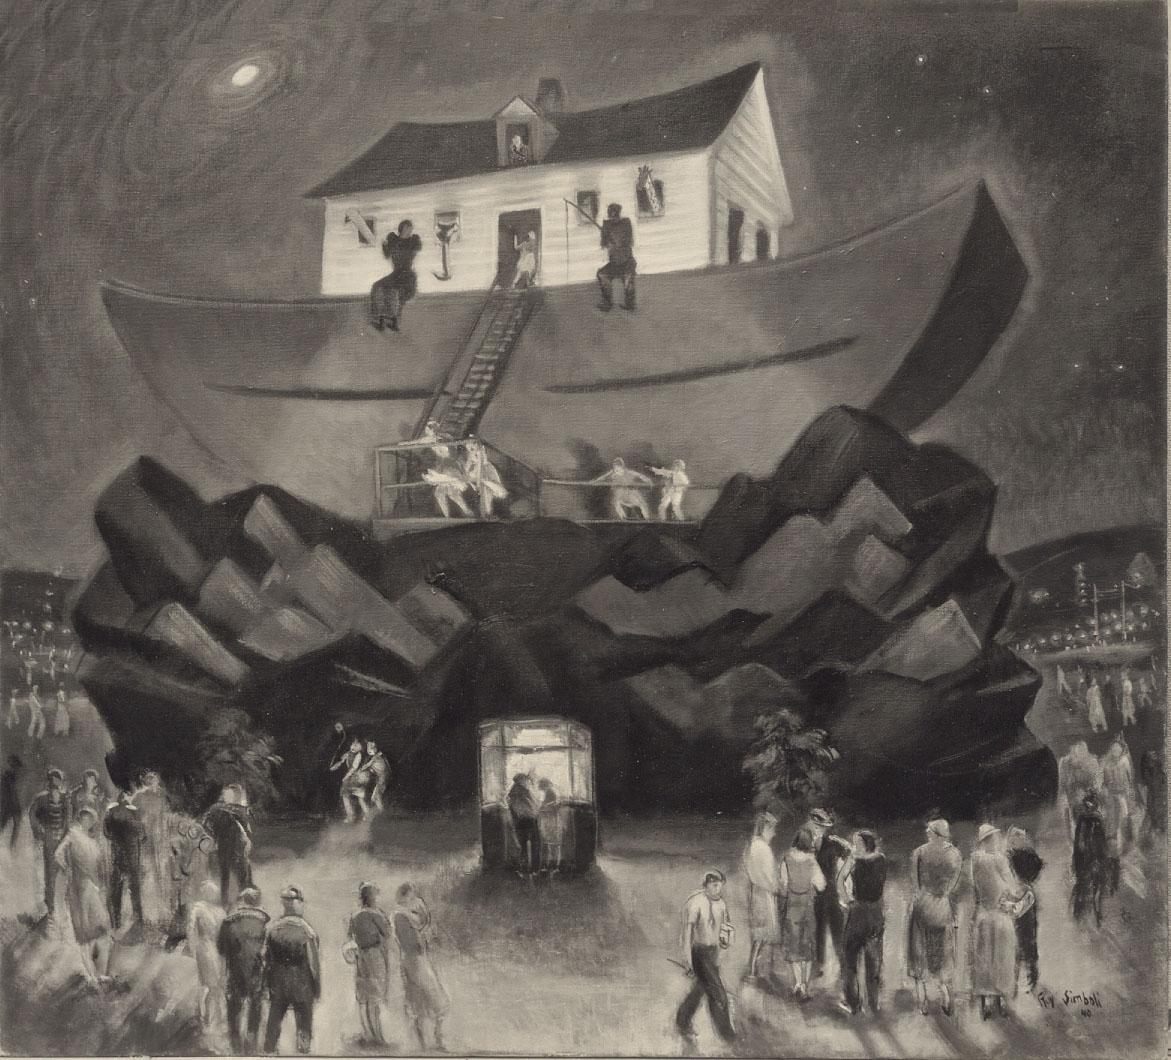 Noah's Ark, Kennywood Park, 1940